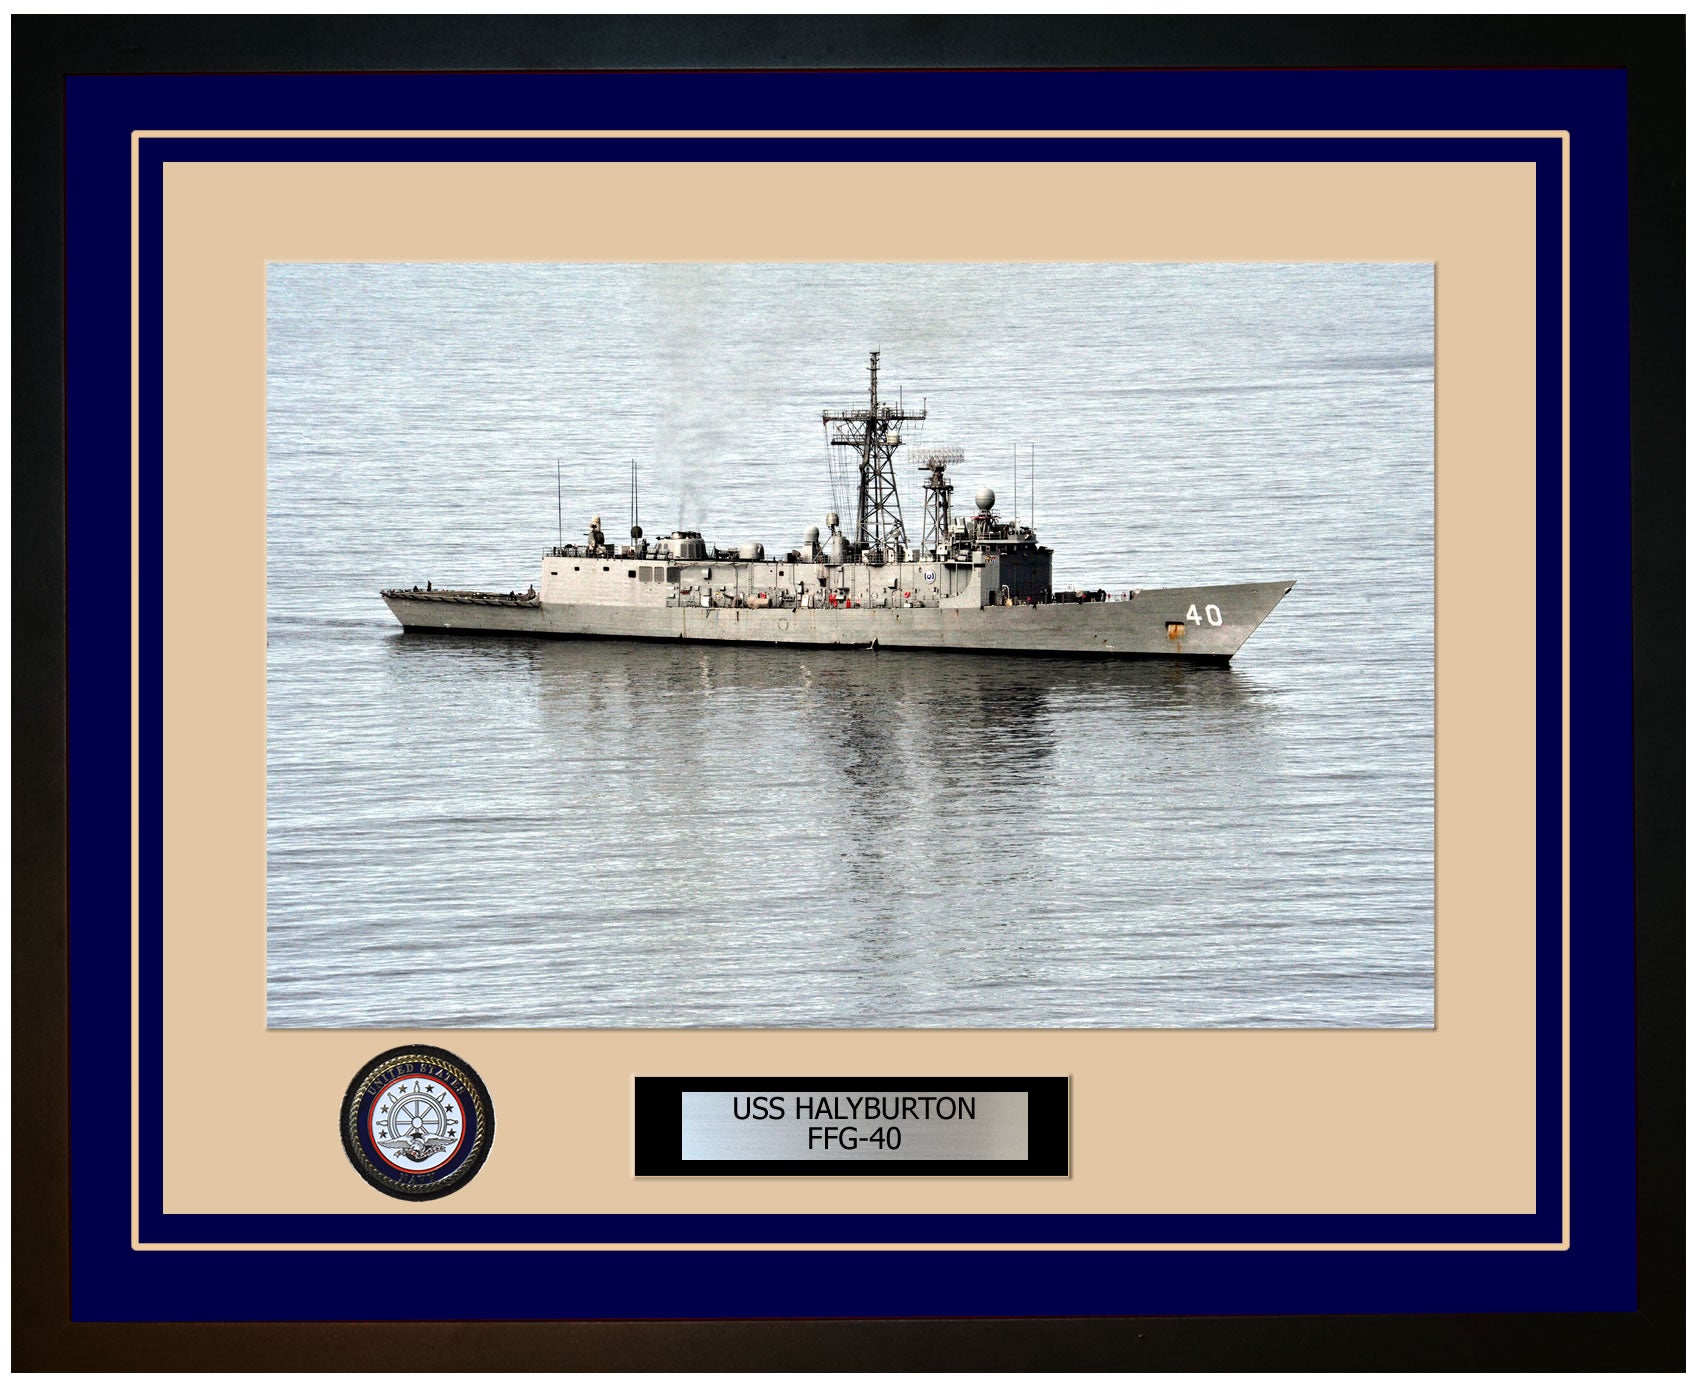 USS HALYBURTON FFG-40 Framed Navy Ship Photo Blue